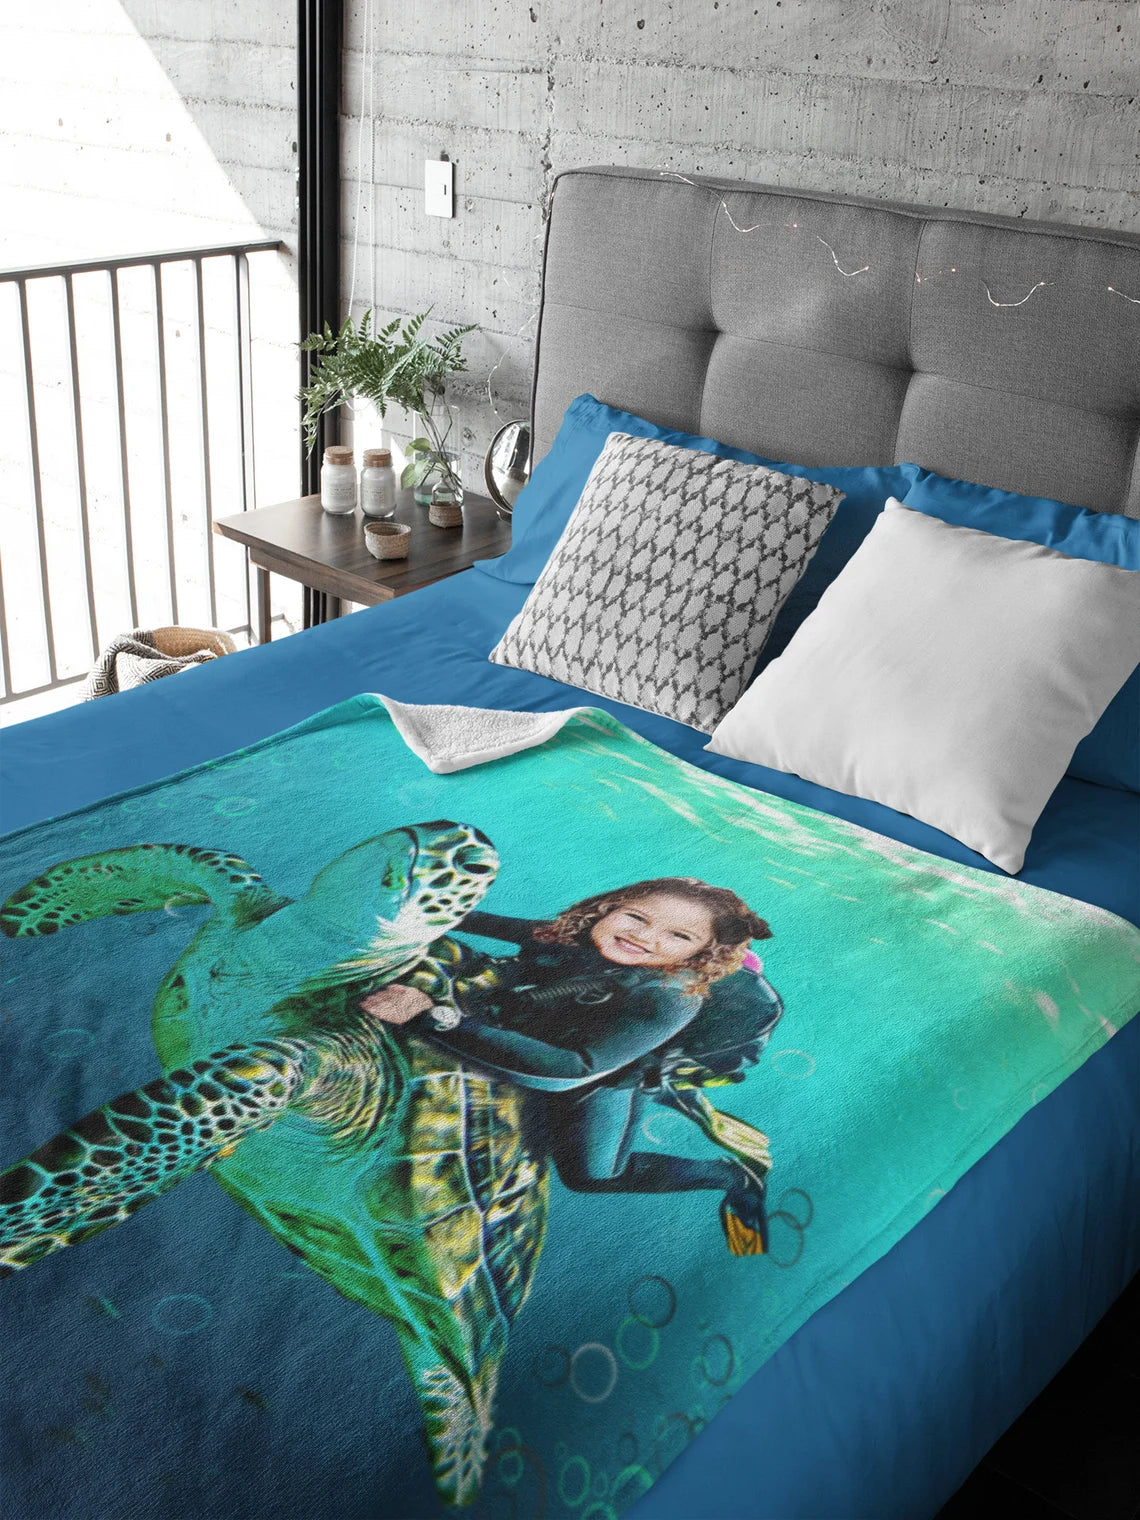 The Sea Turtle Rider Blanket